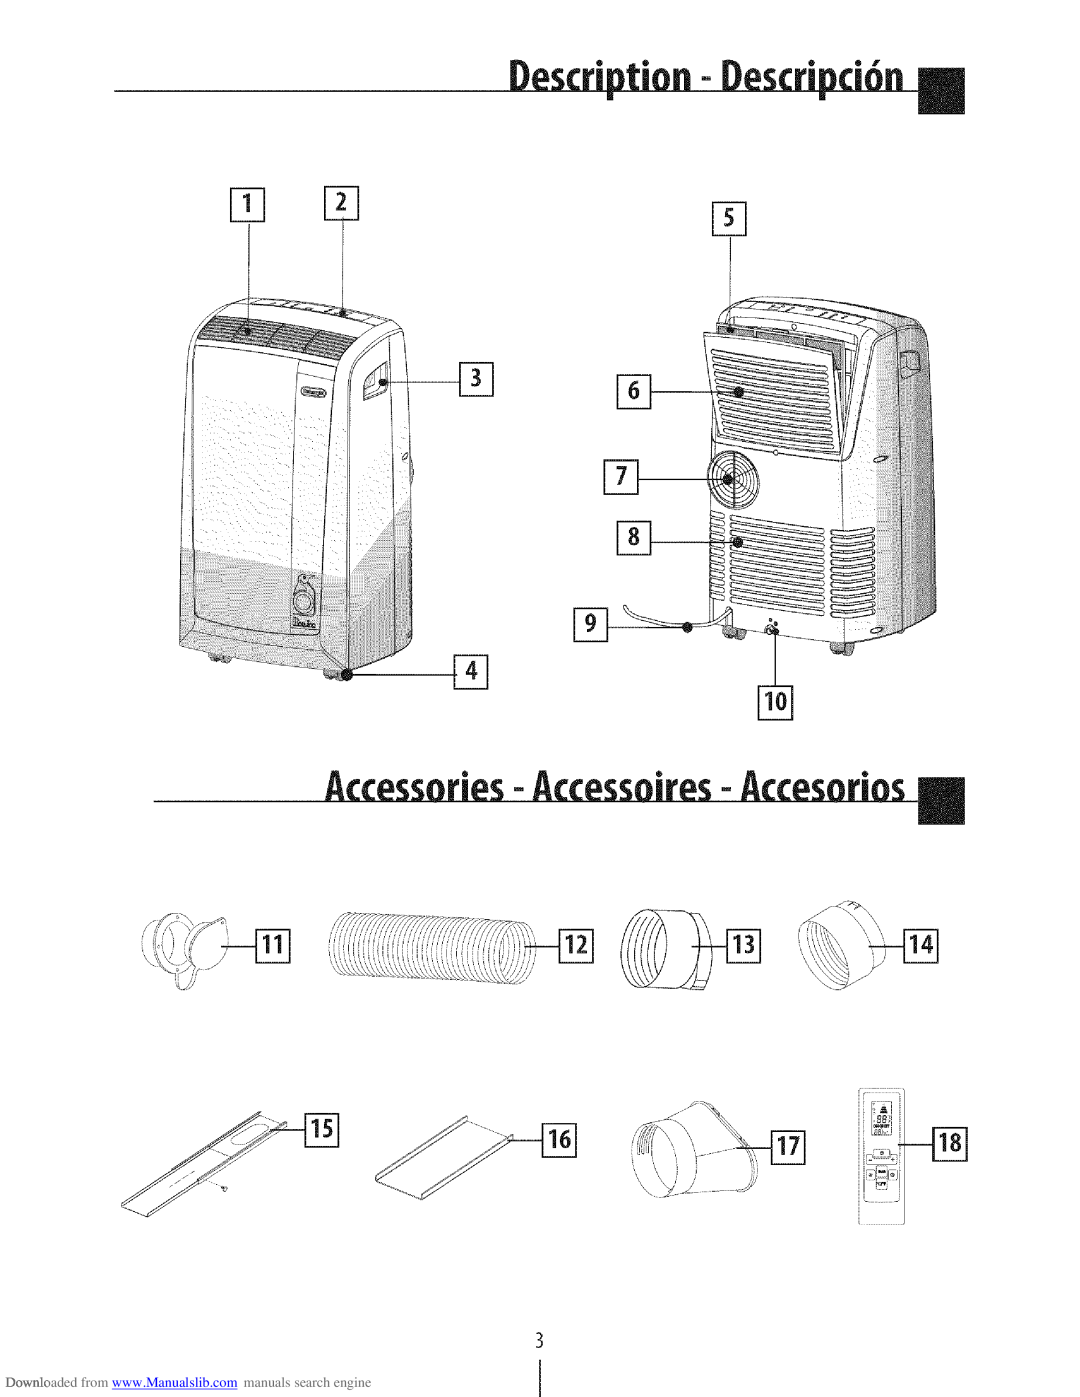 DeLonghi PAC N130HPE instruction manual AccessoriesAccessoires-- Accesorios, Description- Iescripci6n 